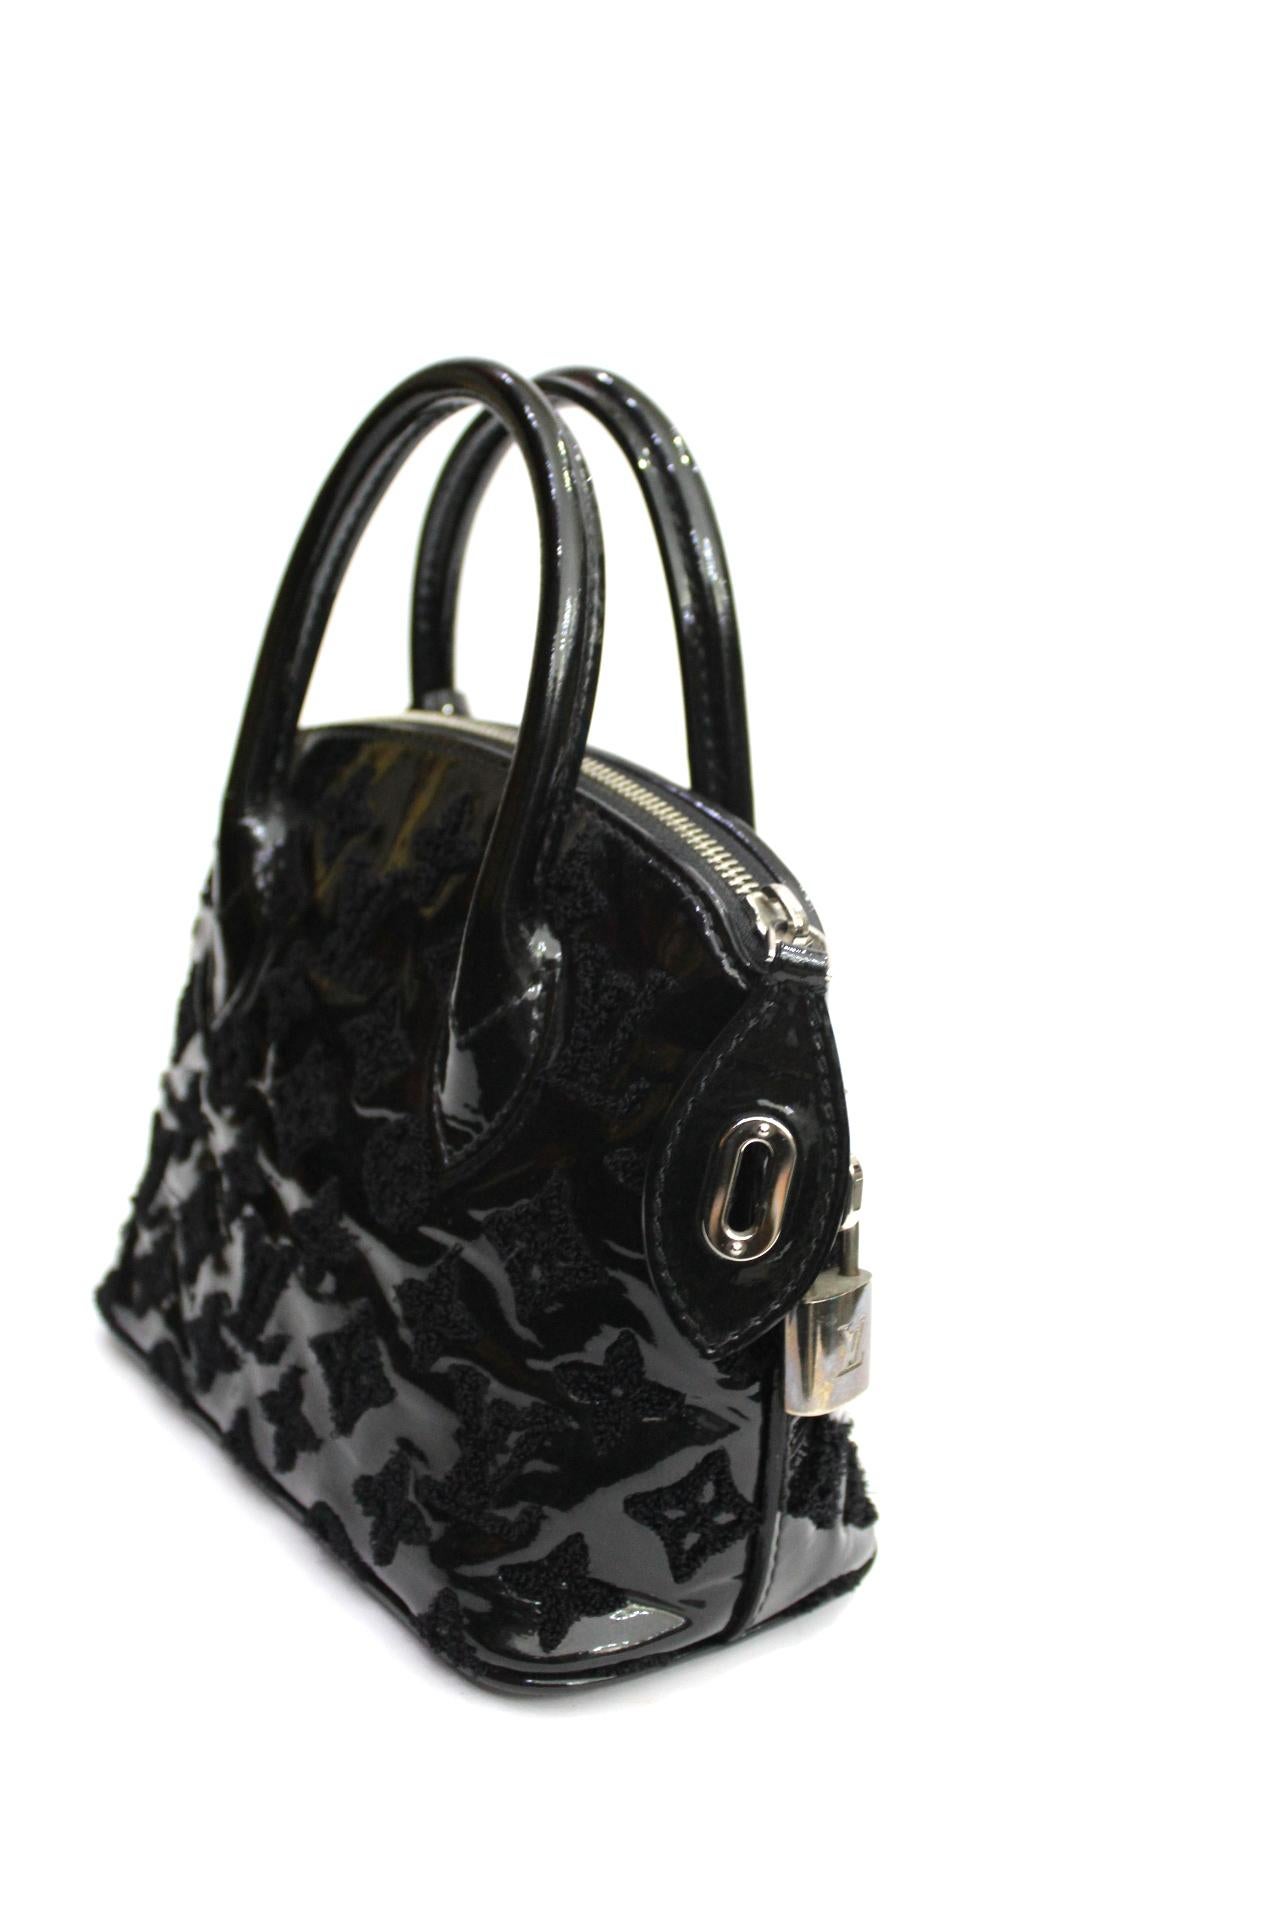 2012 Louis Vuitton Black Patent Leather Lockit Limeted Edition Bag 1